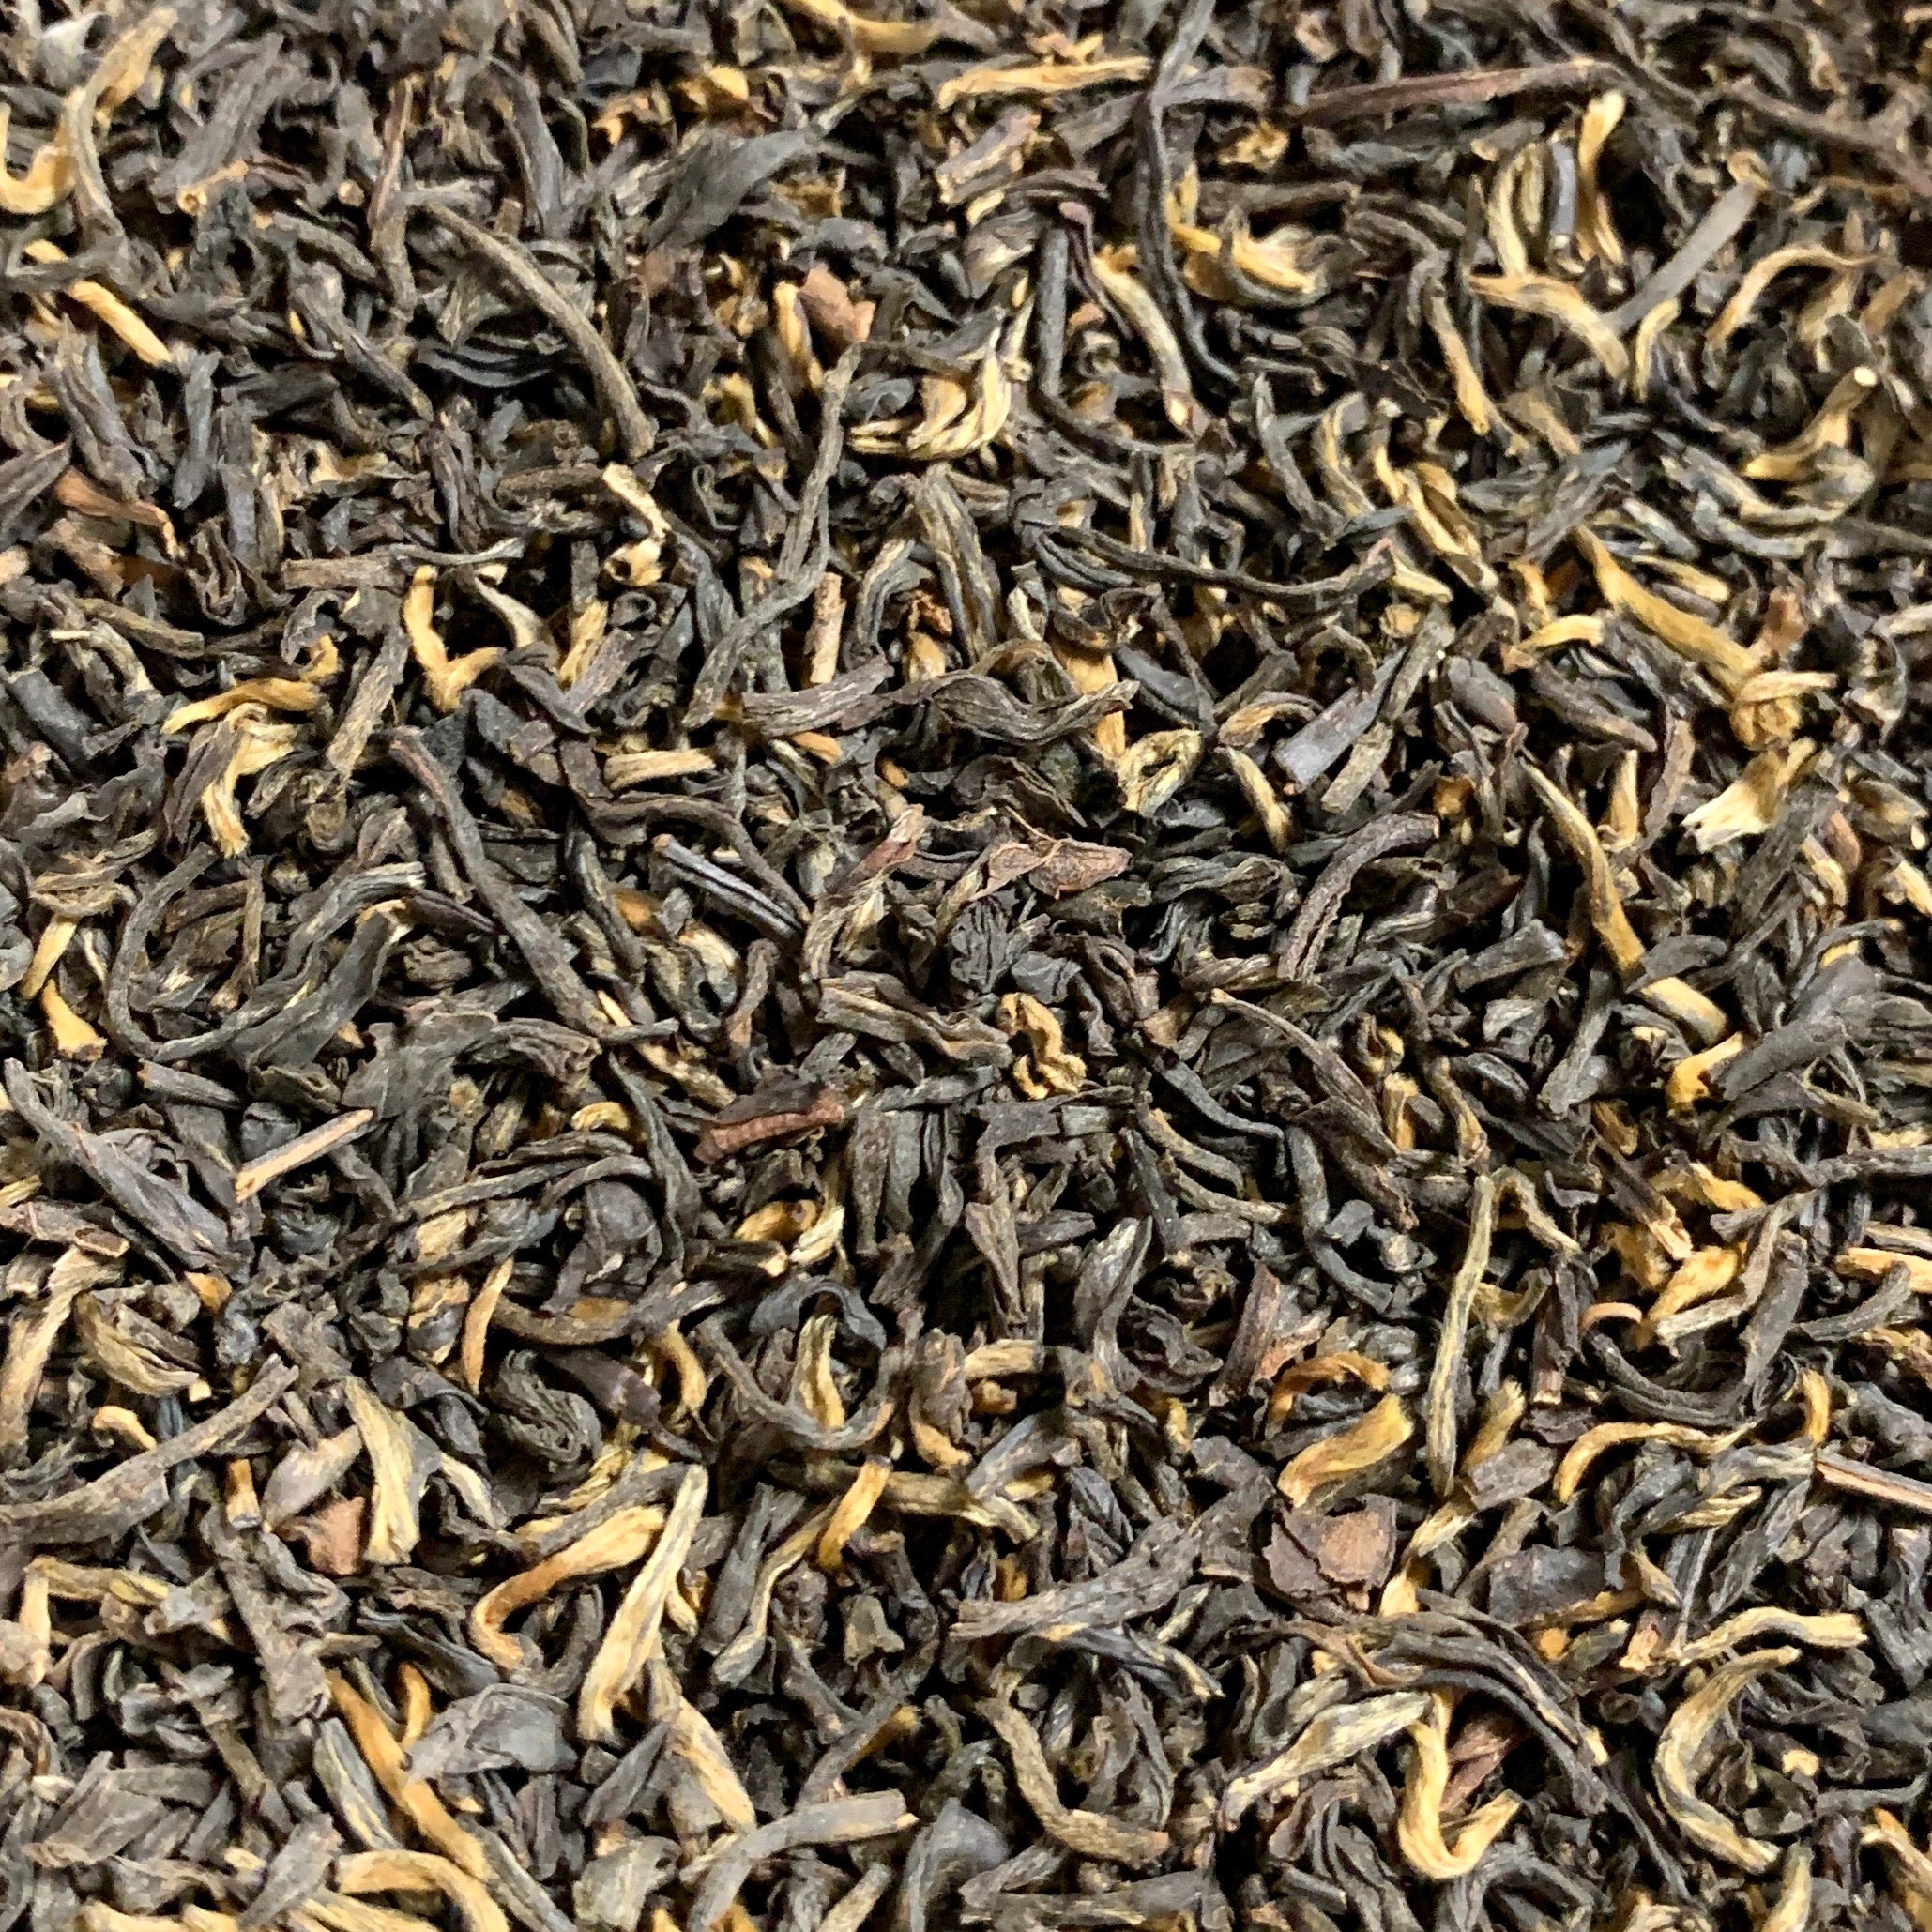 Ancient Forest Black Tea (Camellia sinensis)